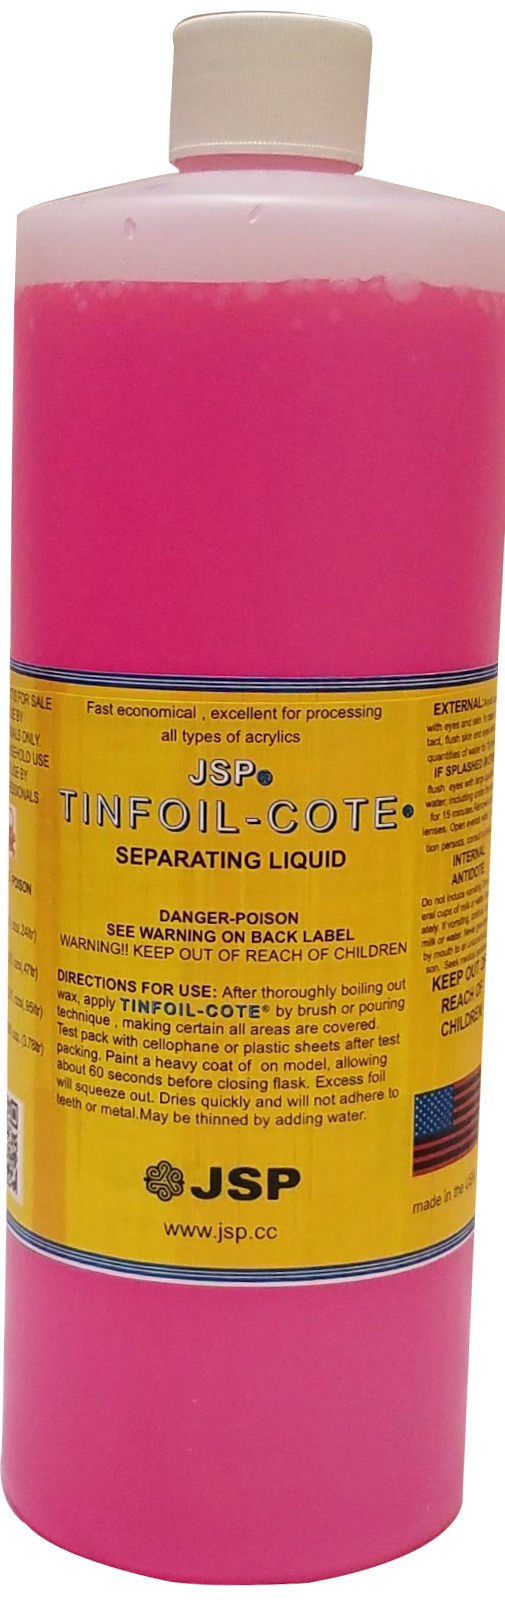 JSP® TINFOIL-COTE SEPARATING LIQUID (thick)32 ozs